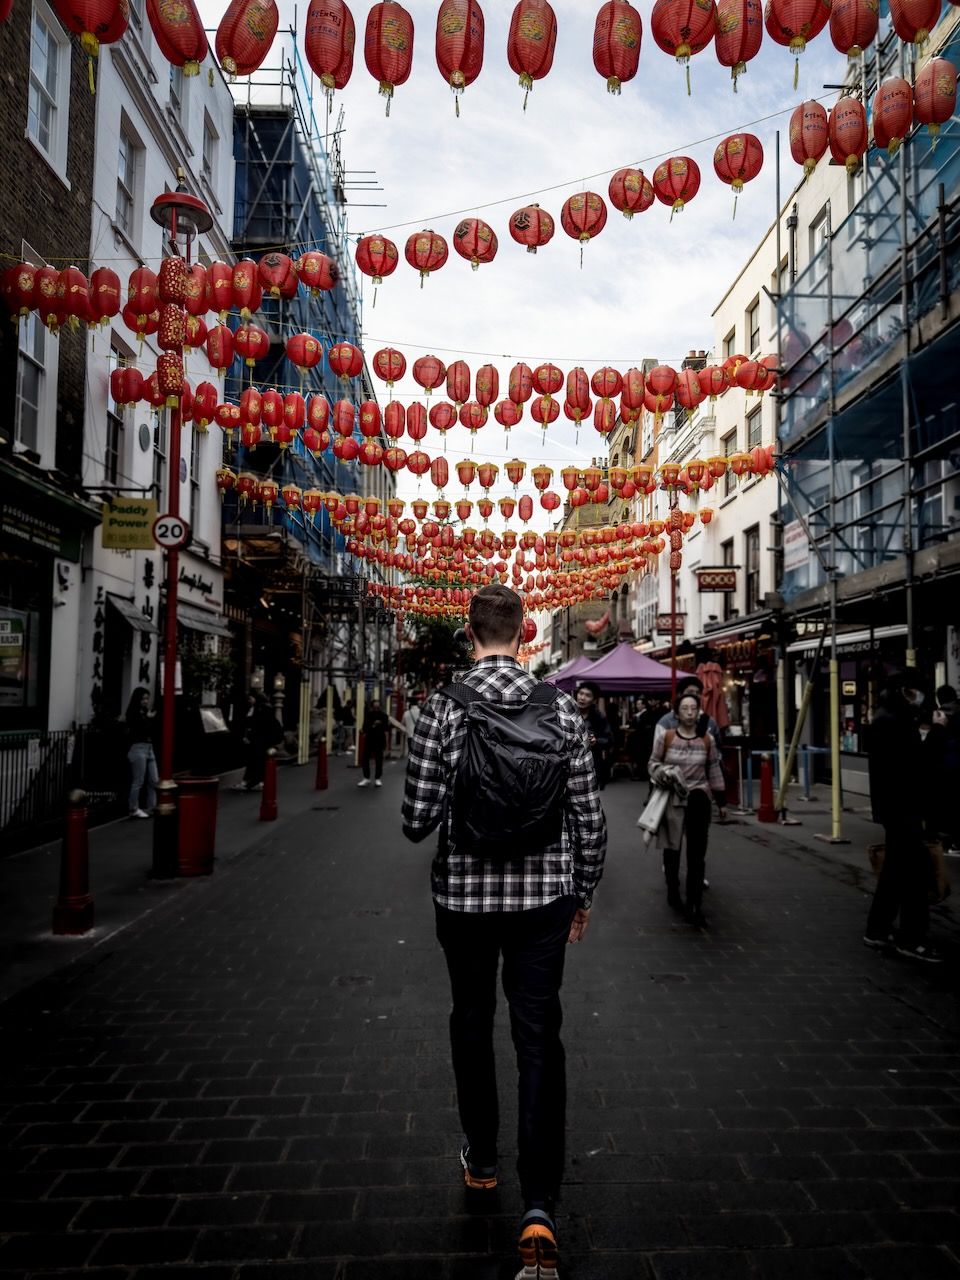 Walking in London chinatown